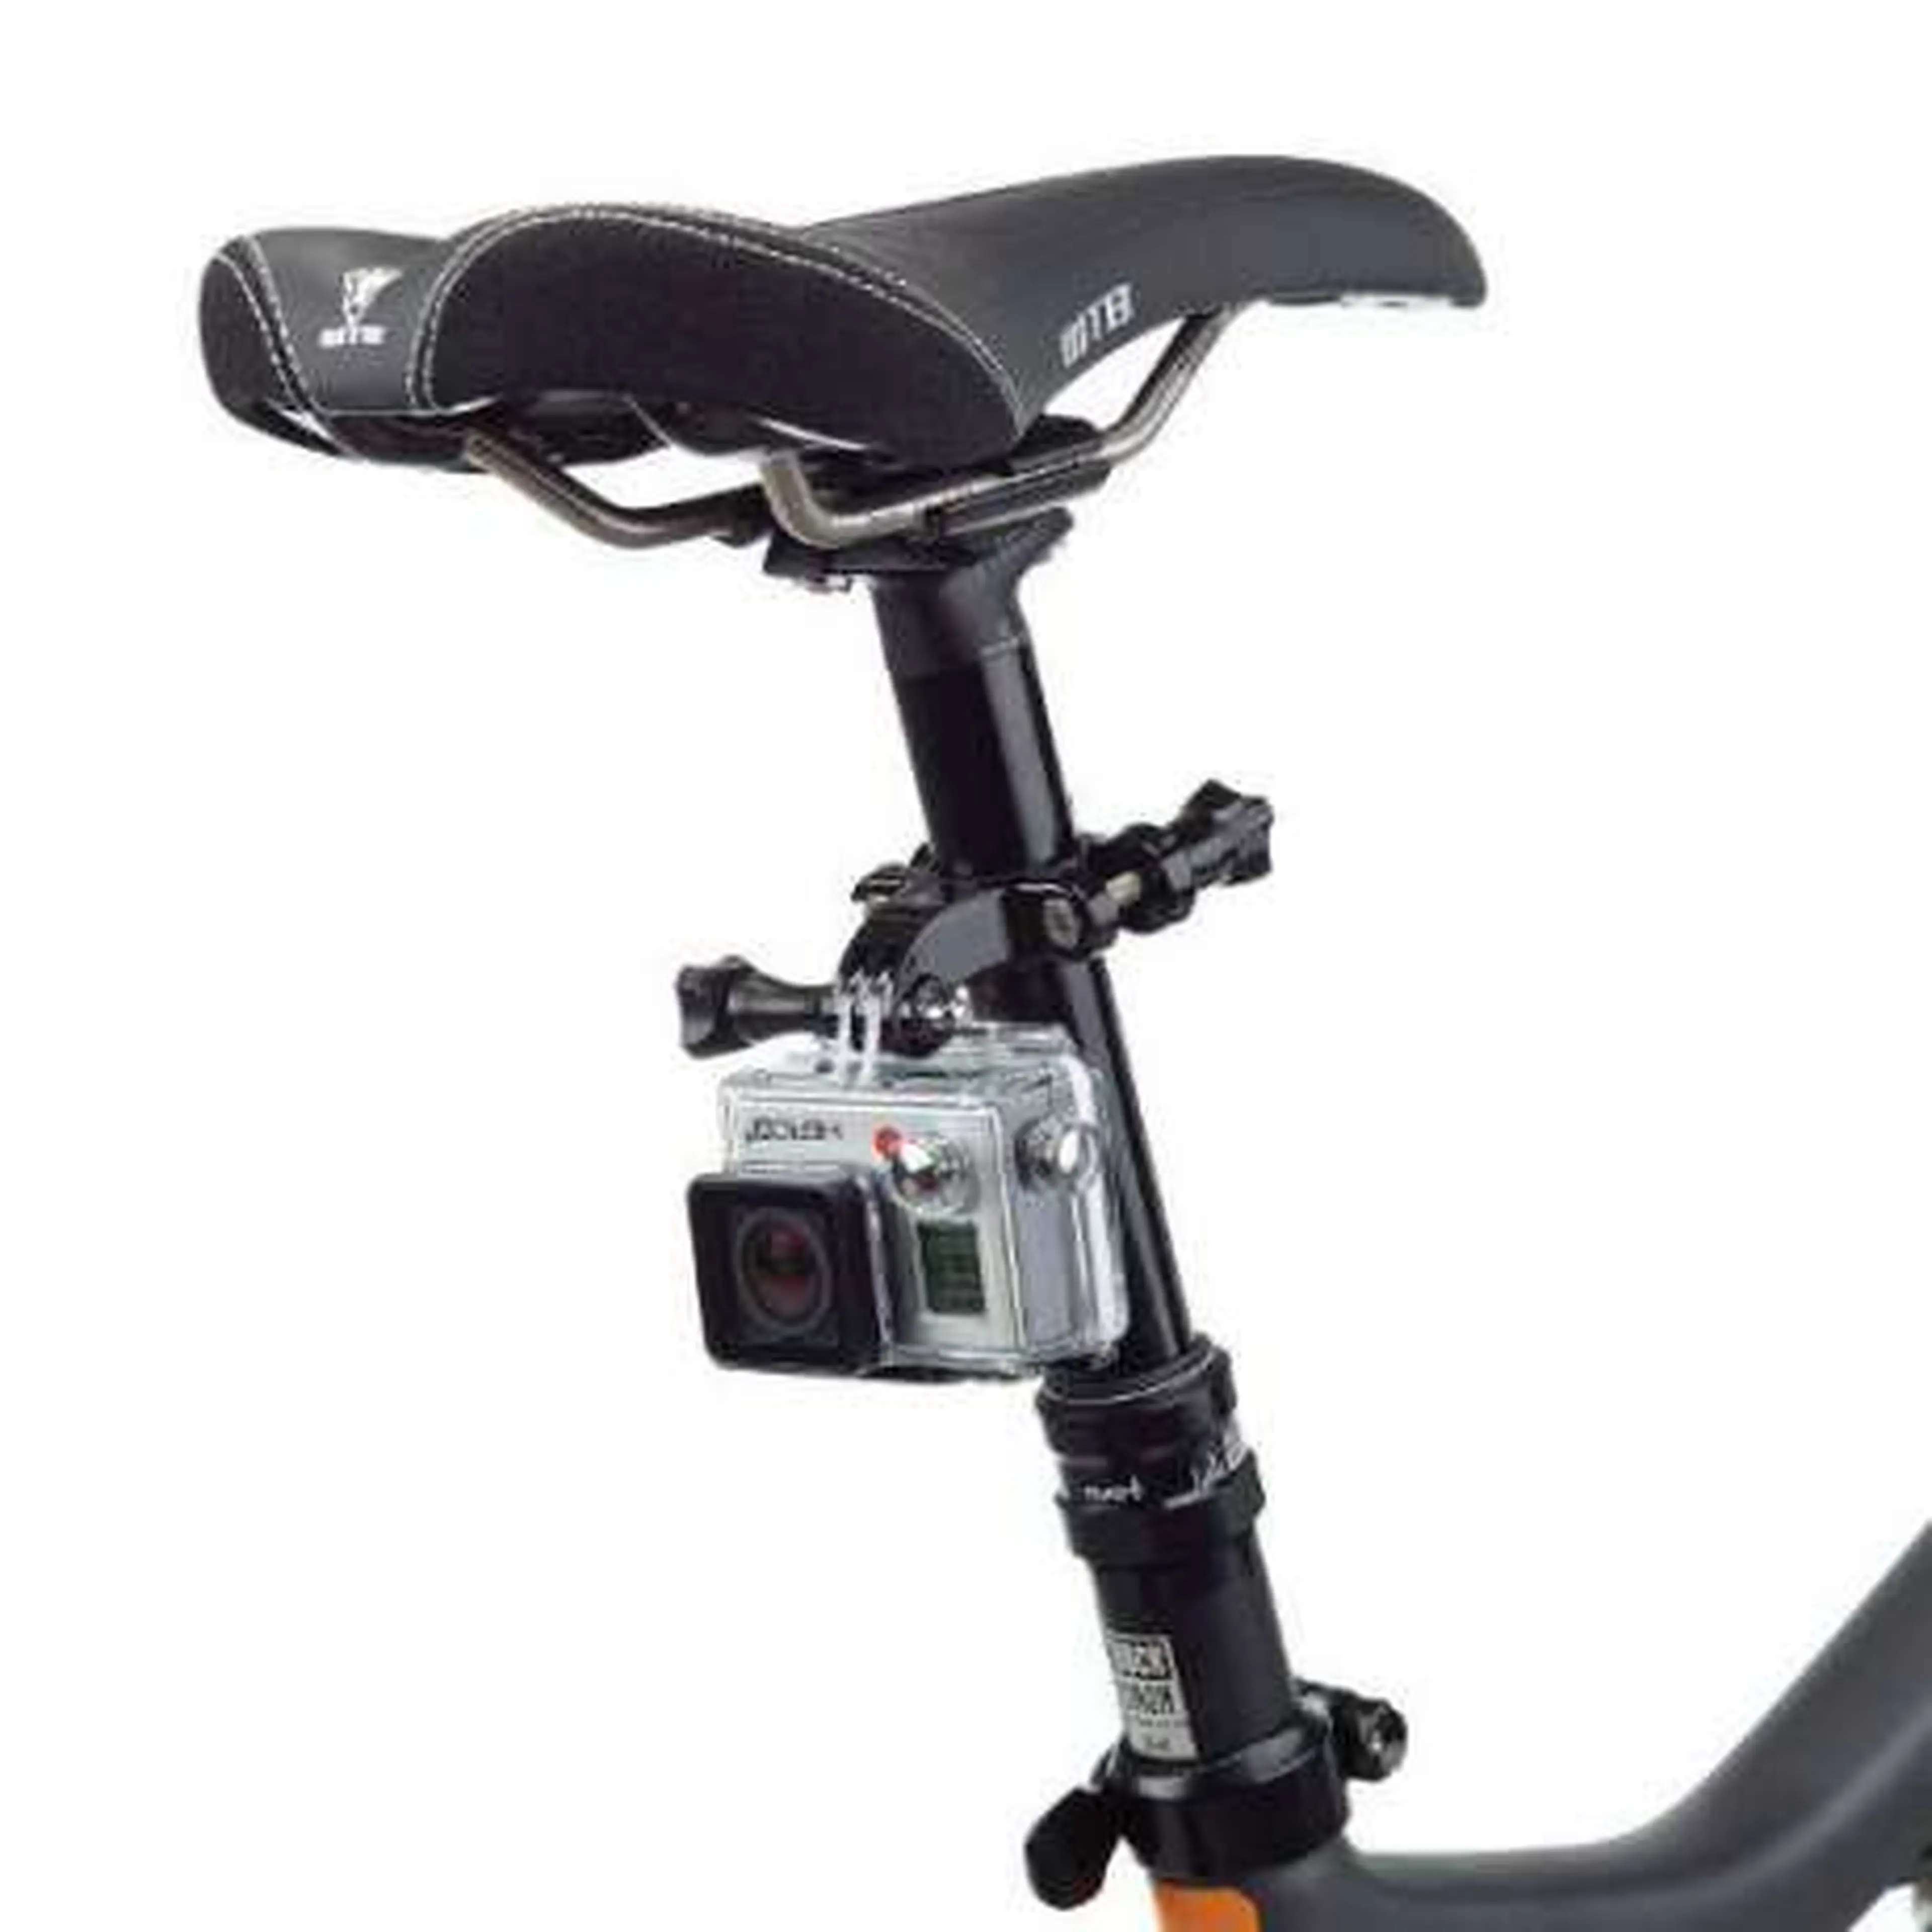 3. Suport pt ghidon bicicleta Furca Tava pt camera GoPro insta360 DJI SJcam